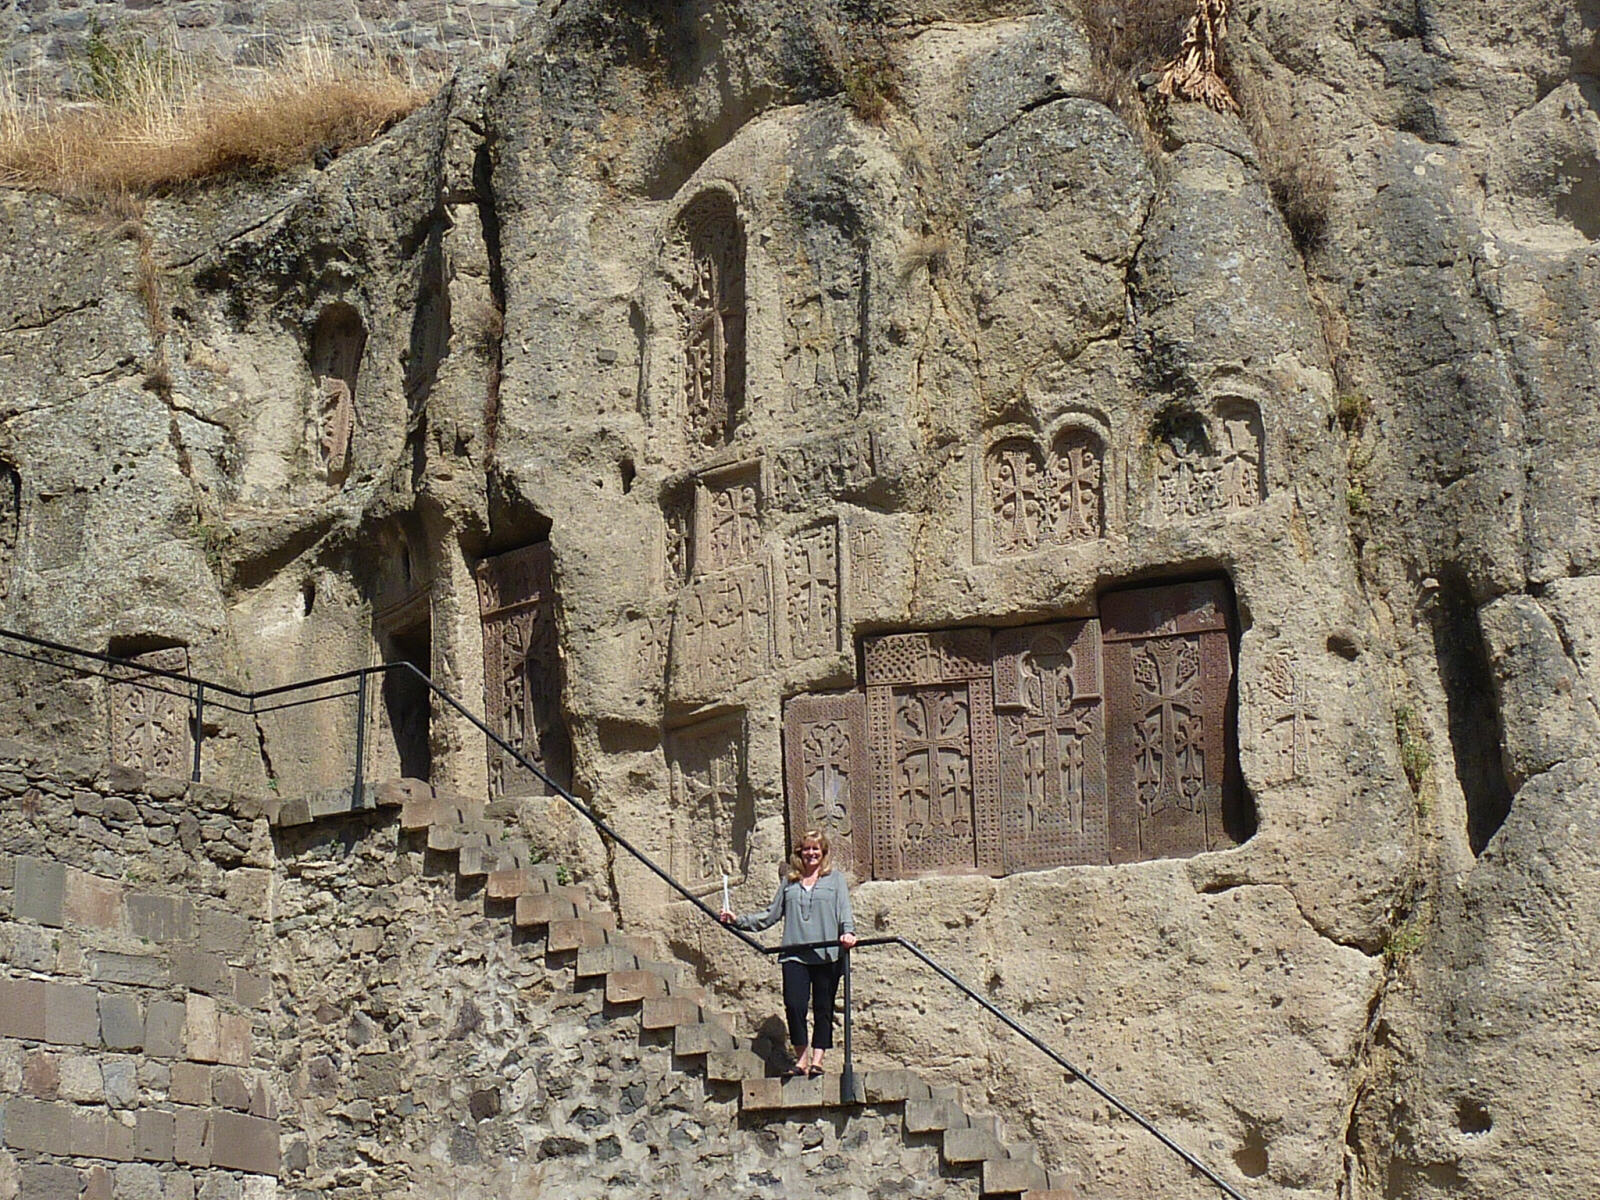 Rock carvings at Geghard monastery in Armenia